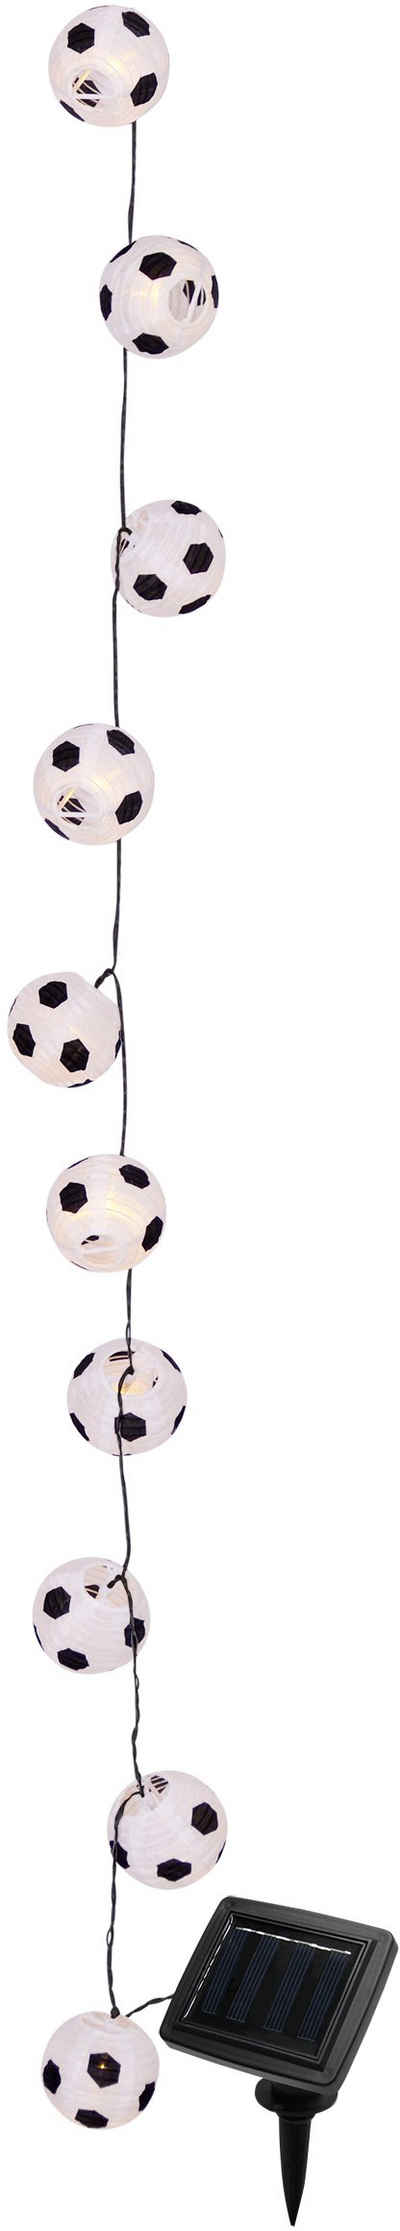 näve Lichterkette Japanballon-20er-Solar-Lichterkette, Fußball, Material: Polyester, Metall, Kunststoff, Farbe: weiß/schwarz